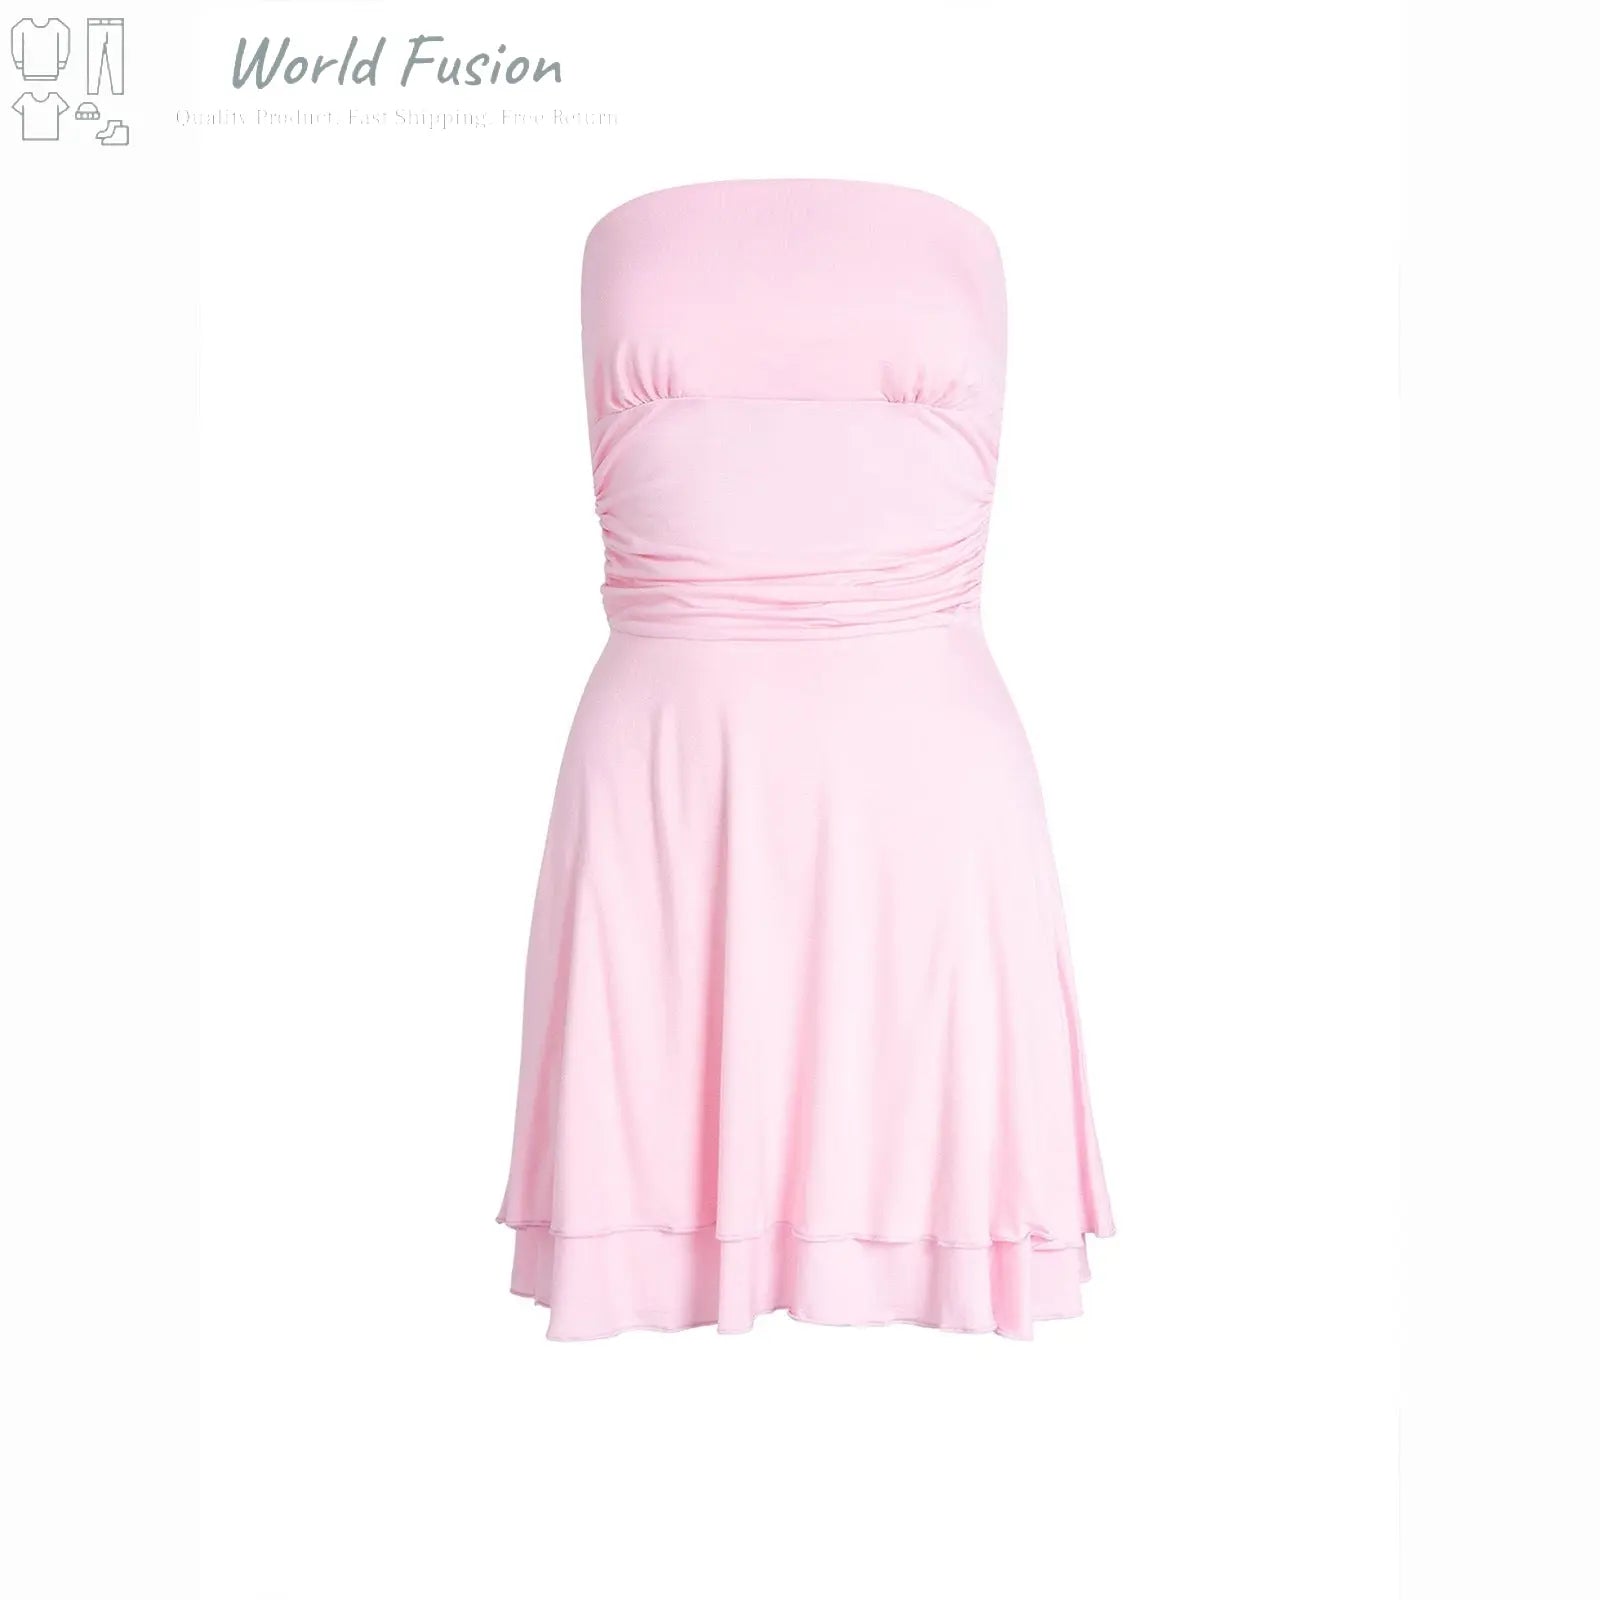 Sexy Summer Dresses - World Fusion